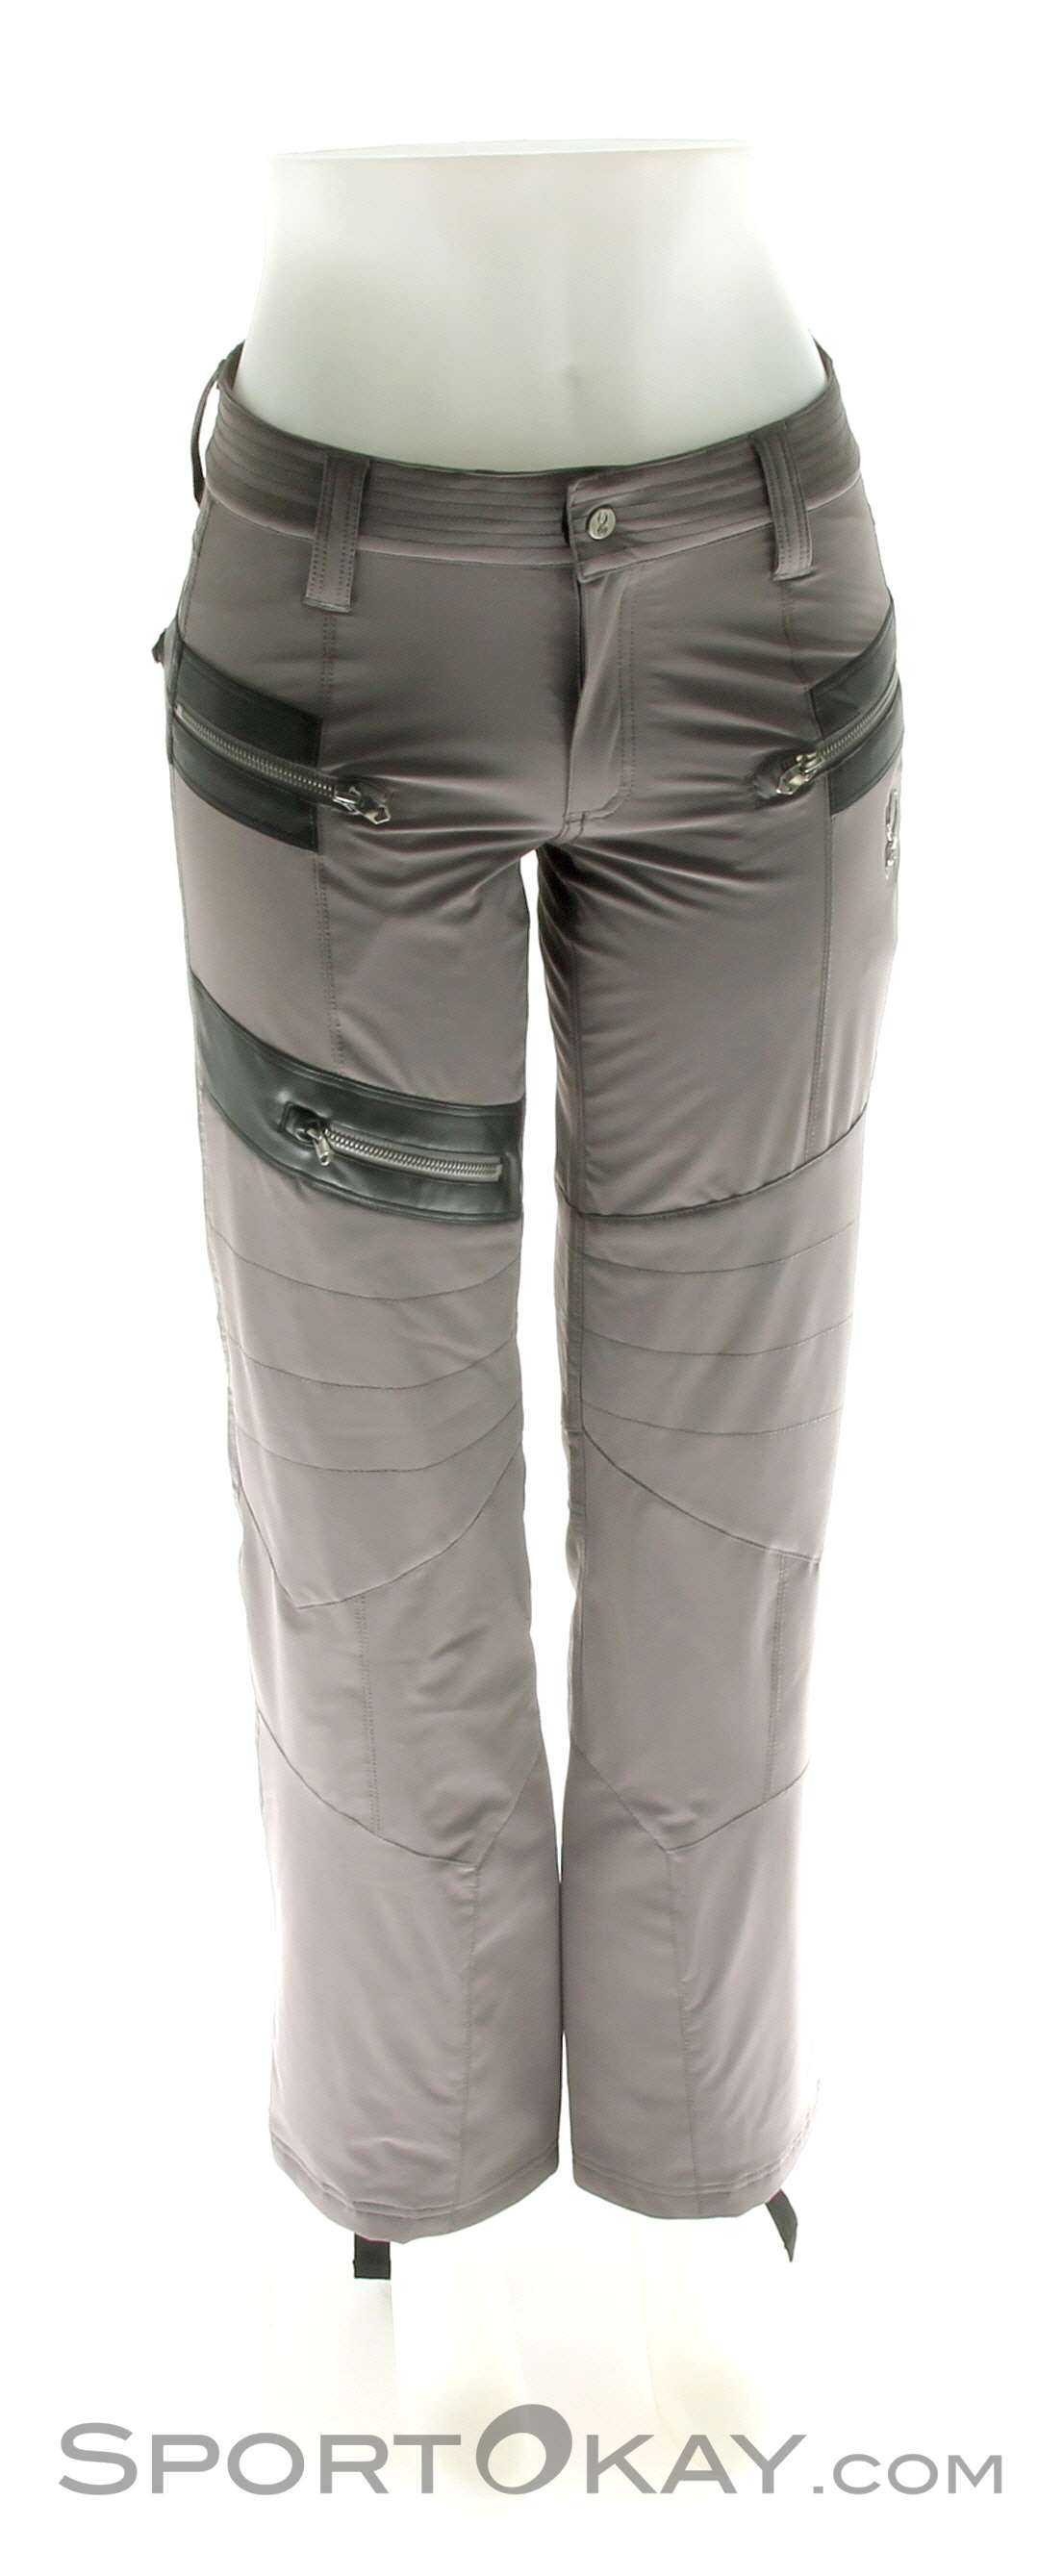 Spyder Amour GORE-TEX Infinium Insulated Ski Pant (Women's